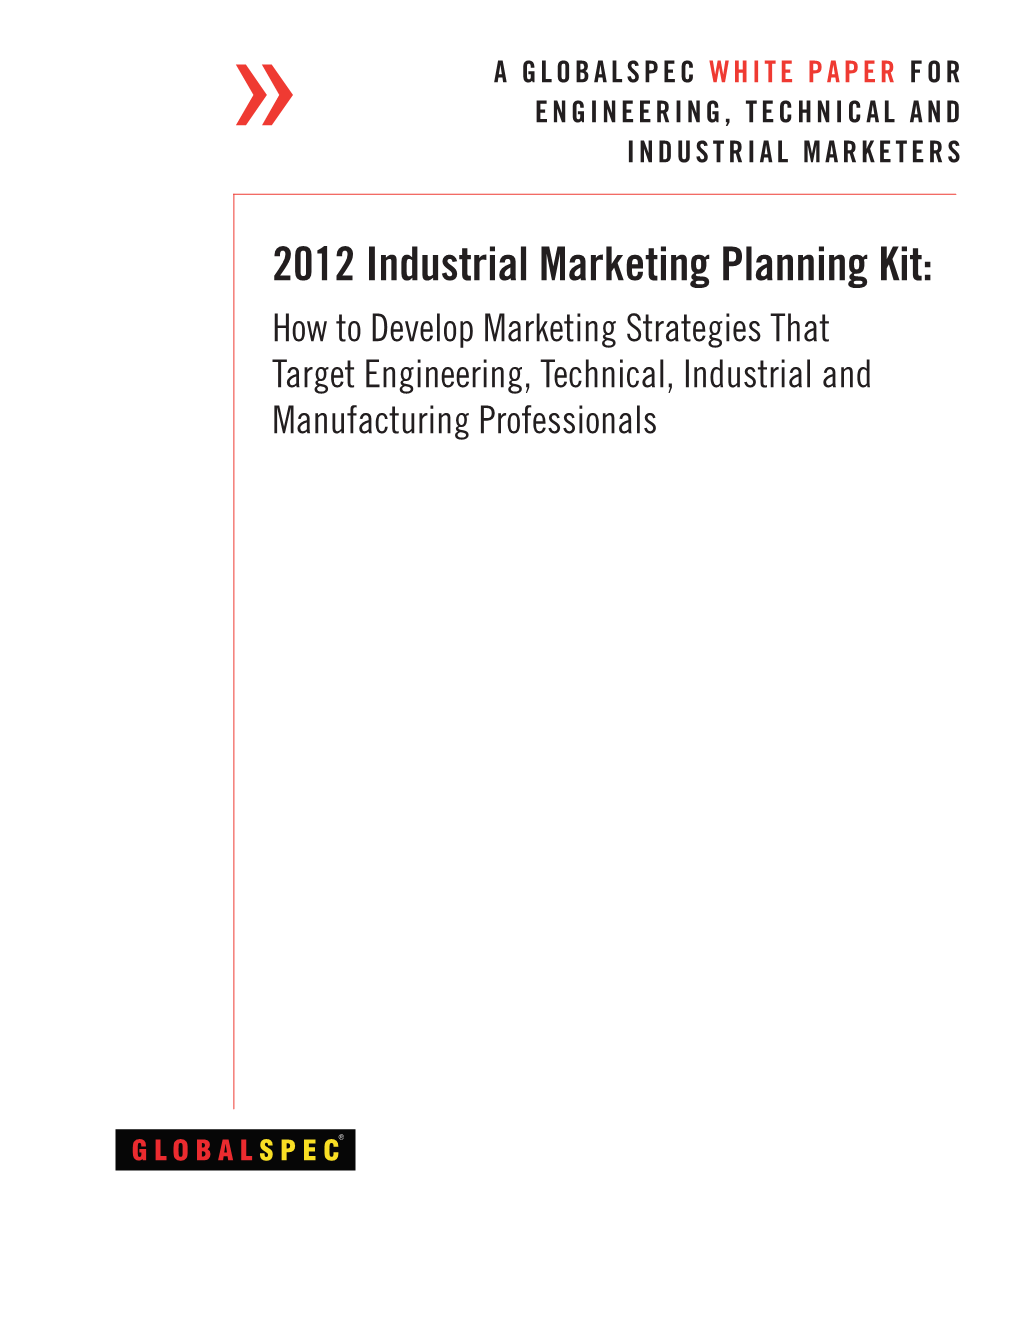 2011 Industrial Marketing Planning Kit